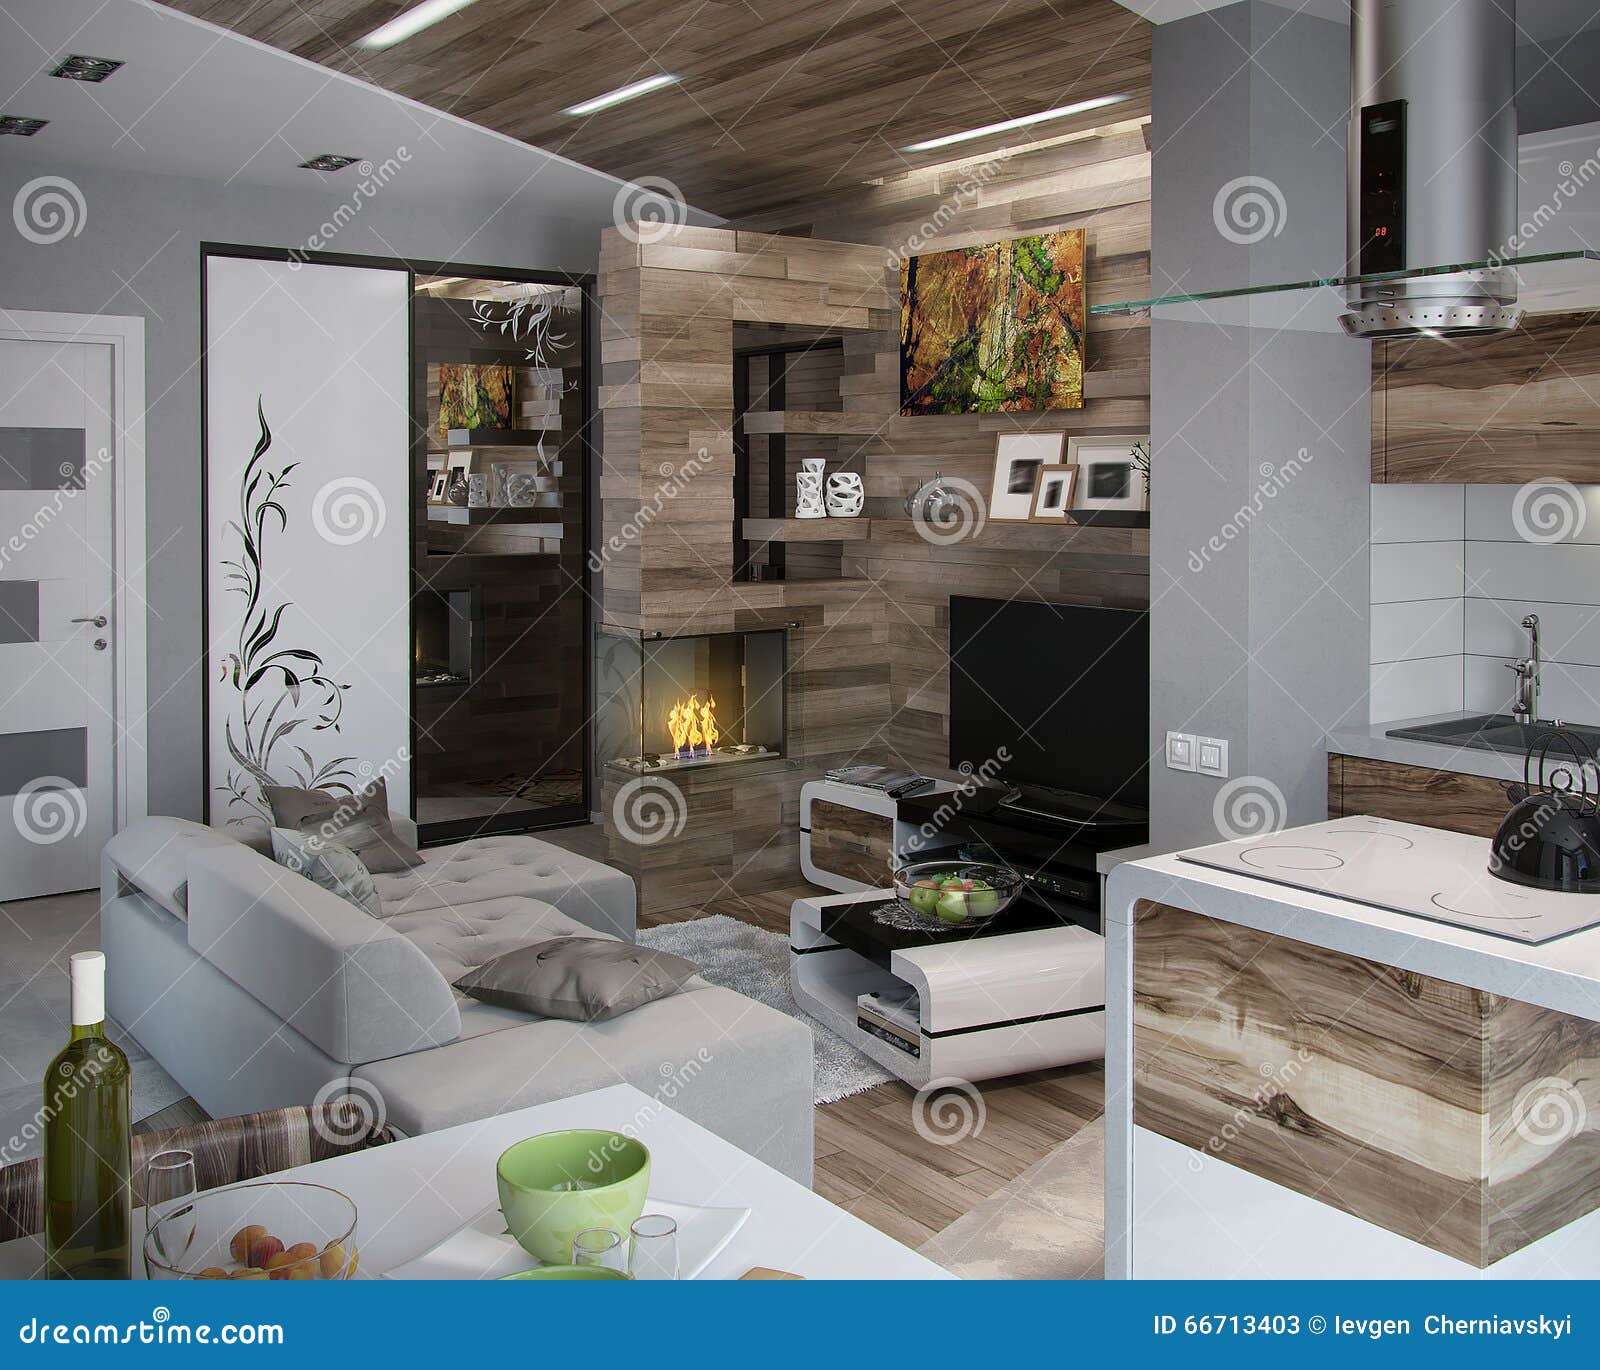 Open Concept Kitchen And Living Room 3d Render Stock Illustration